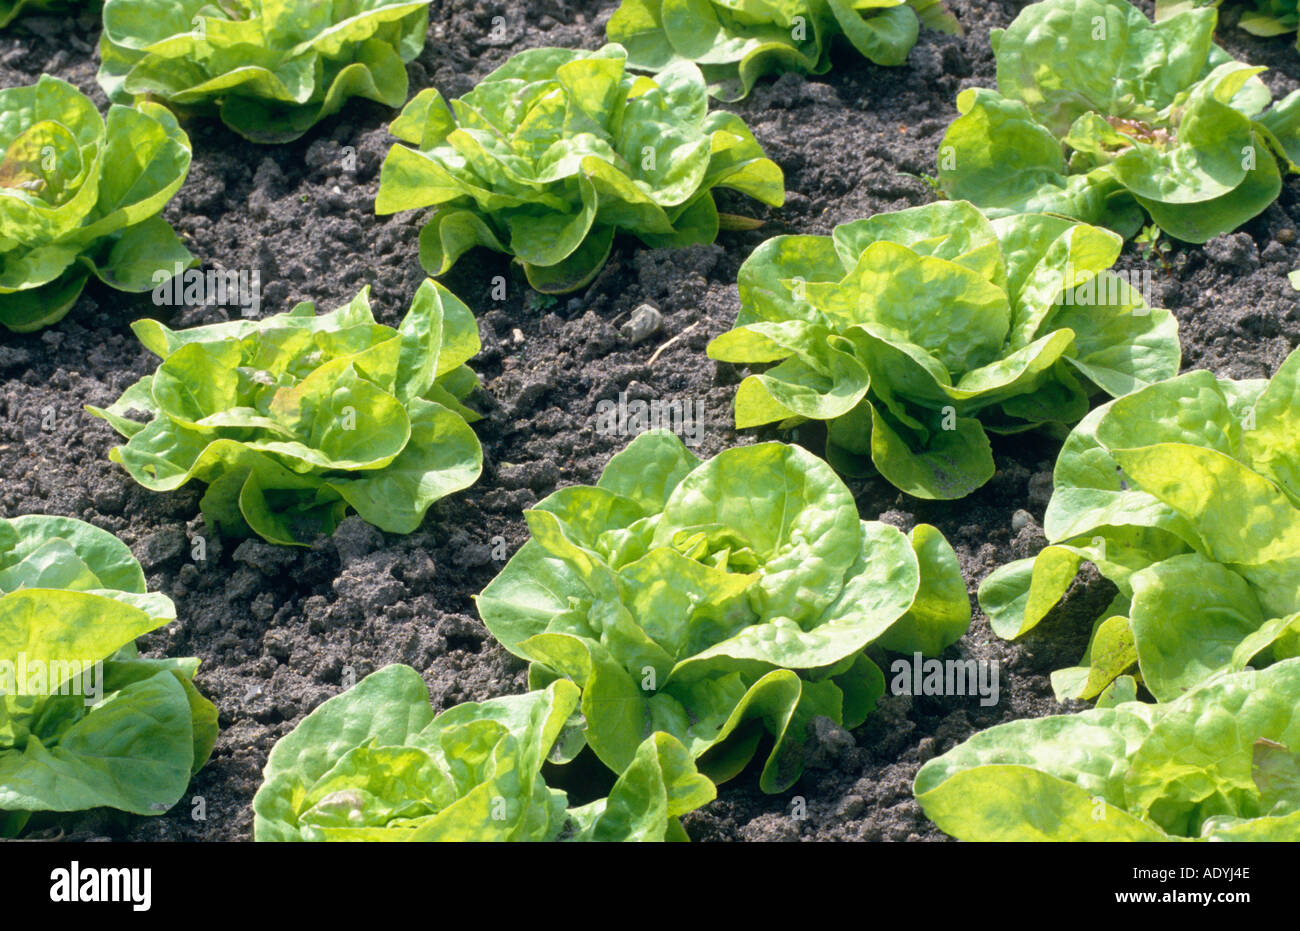 garden lettuce (Lactuca sativa), rows of garden lettuce. Stock Photo